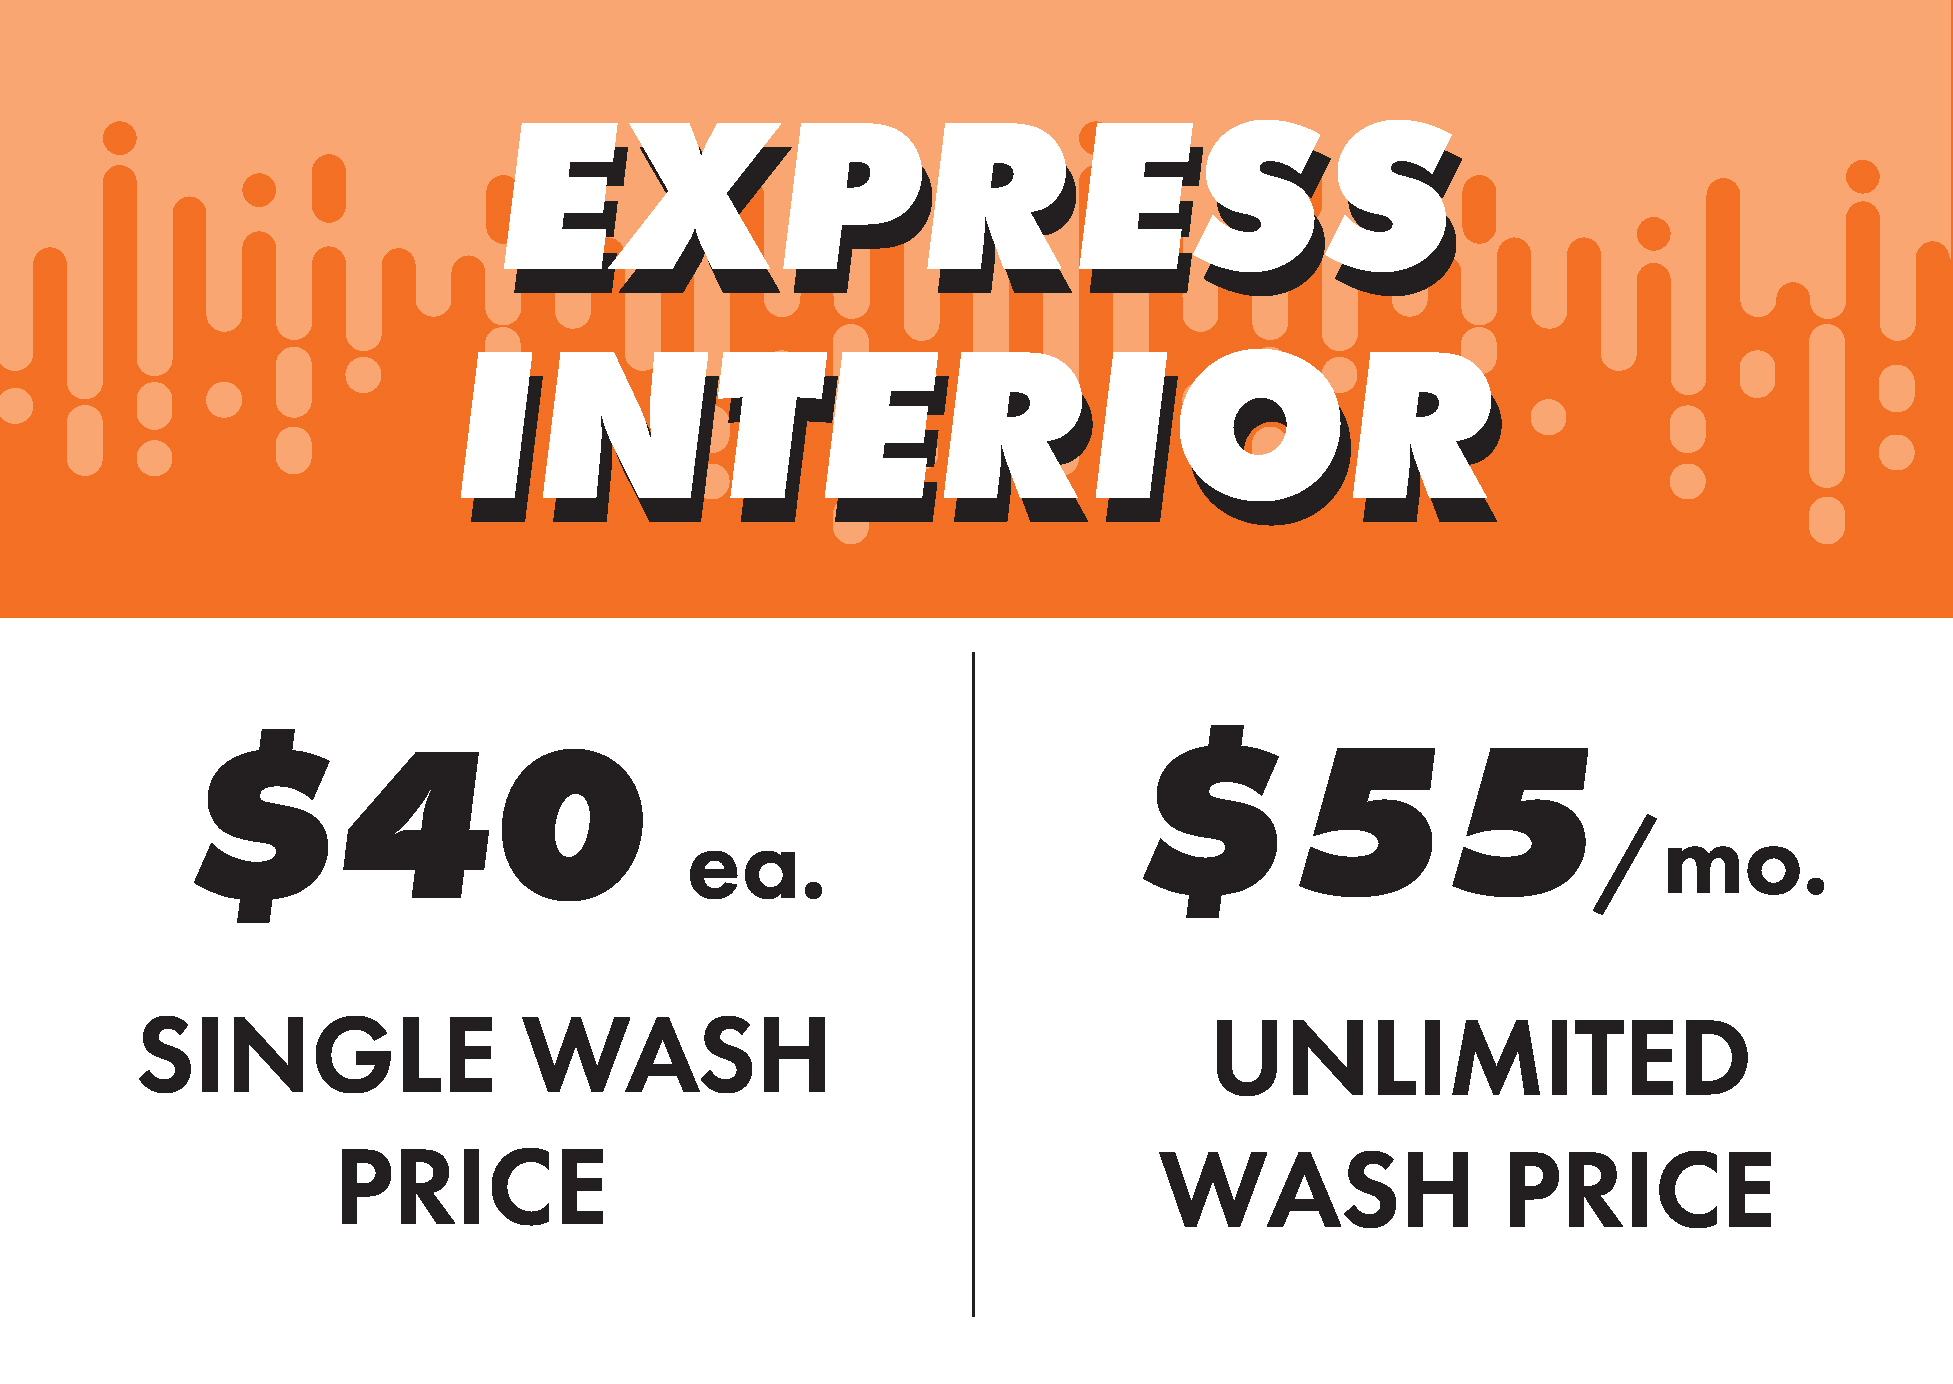 Express Interior Price Card